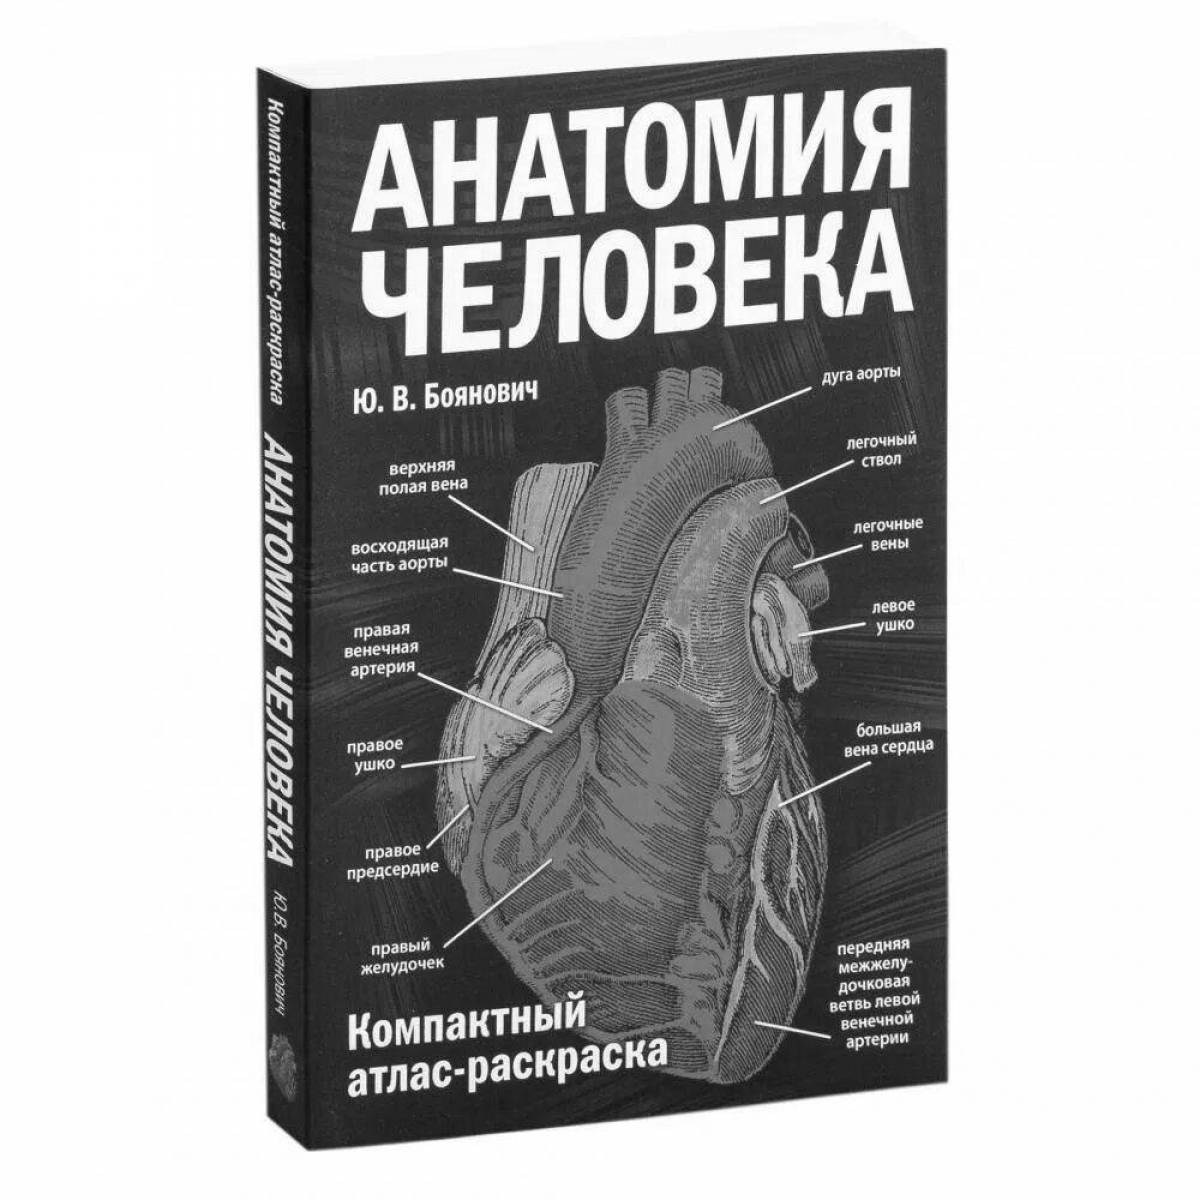 Atlas of human anatomy pdf #8